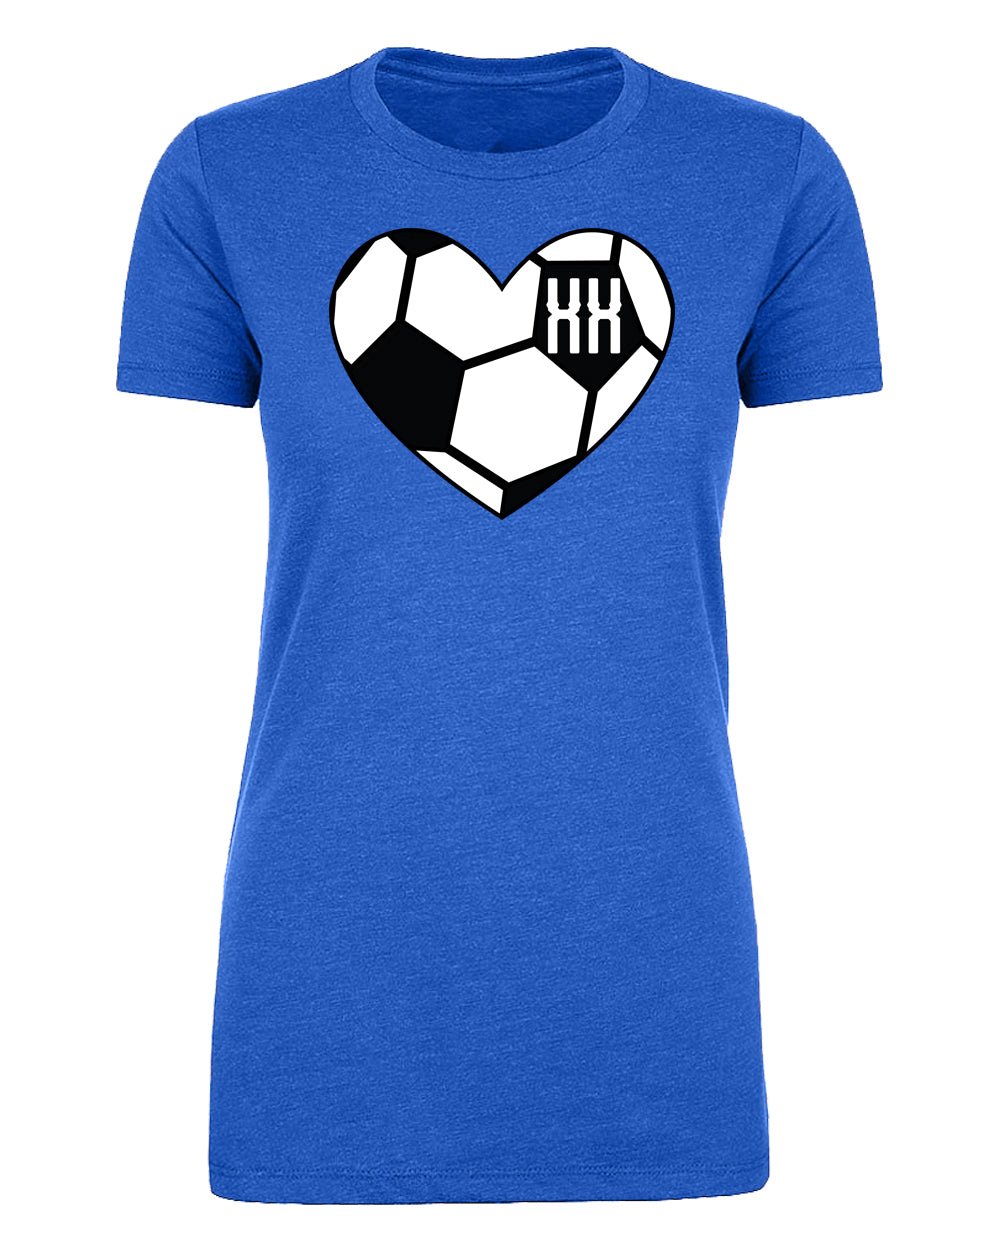 Classic Soccer Ball Heart & Custom Number Womens T Shirts - Mato & Hash